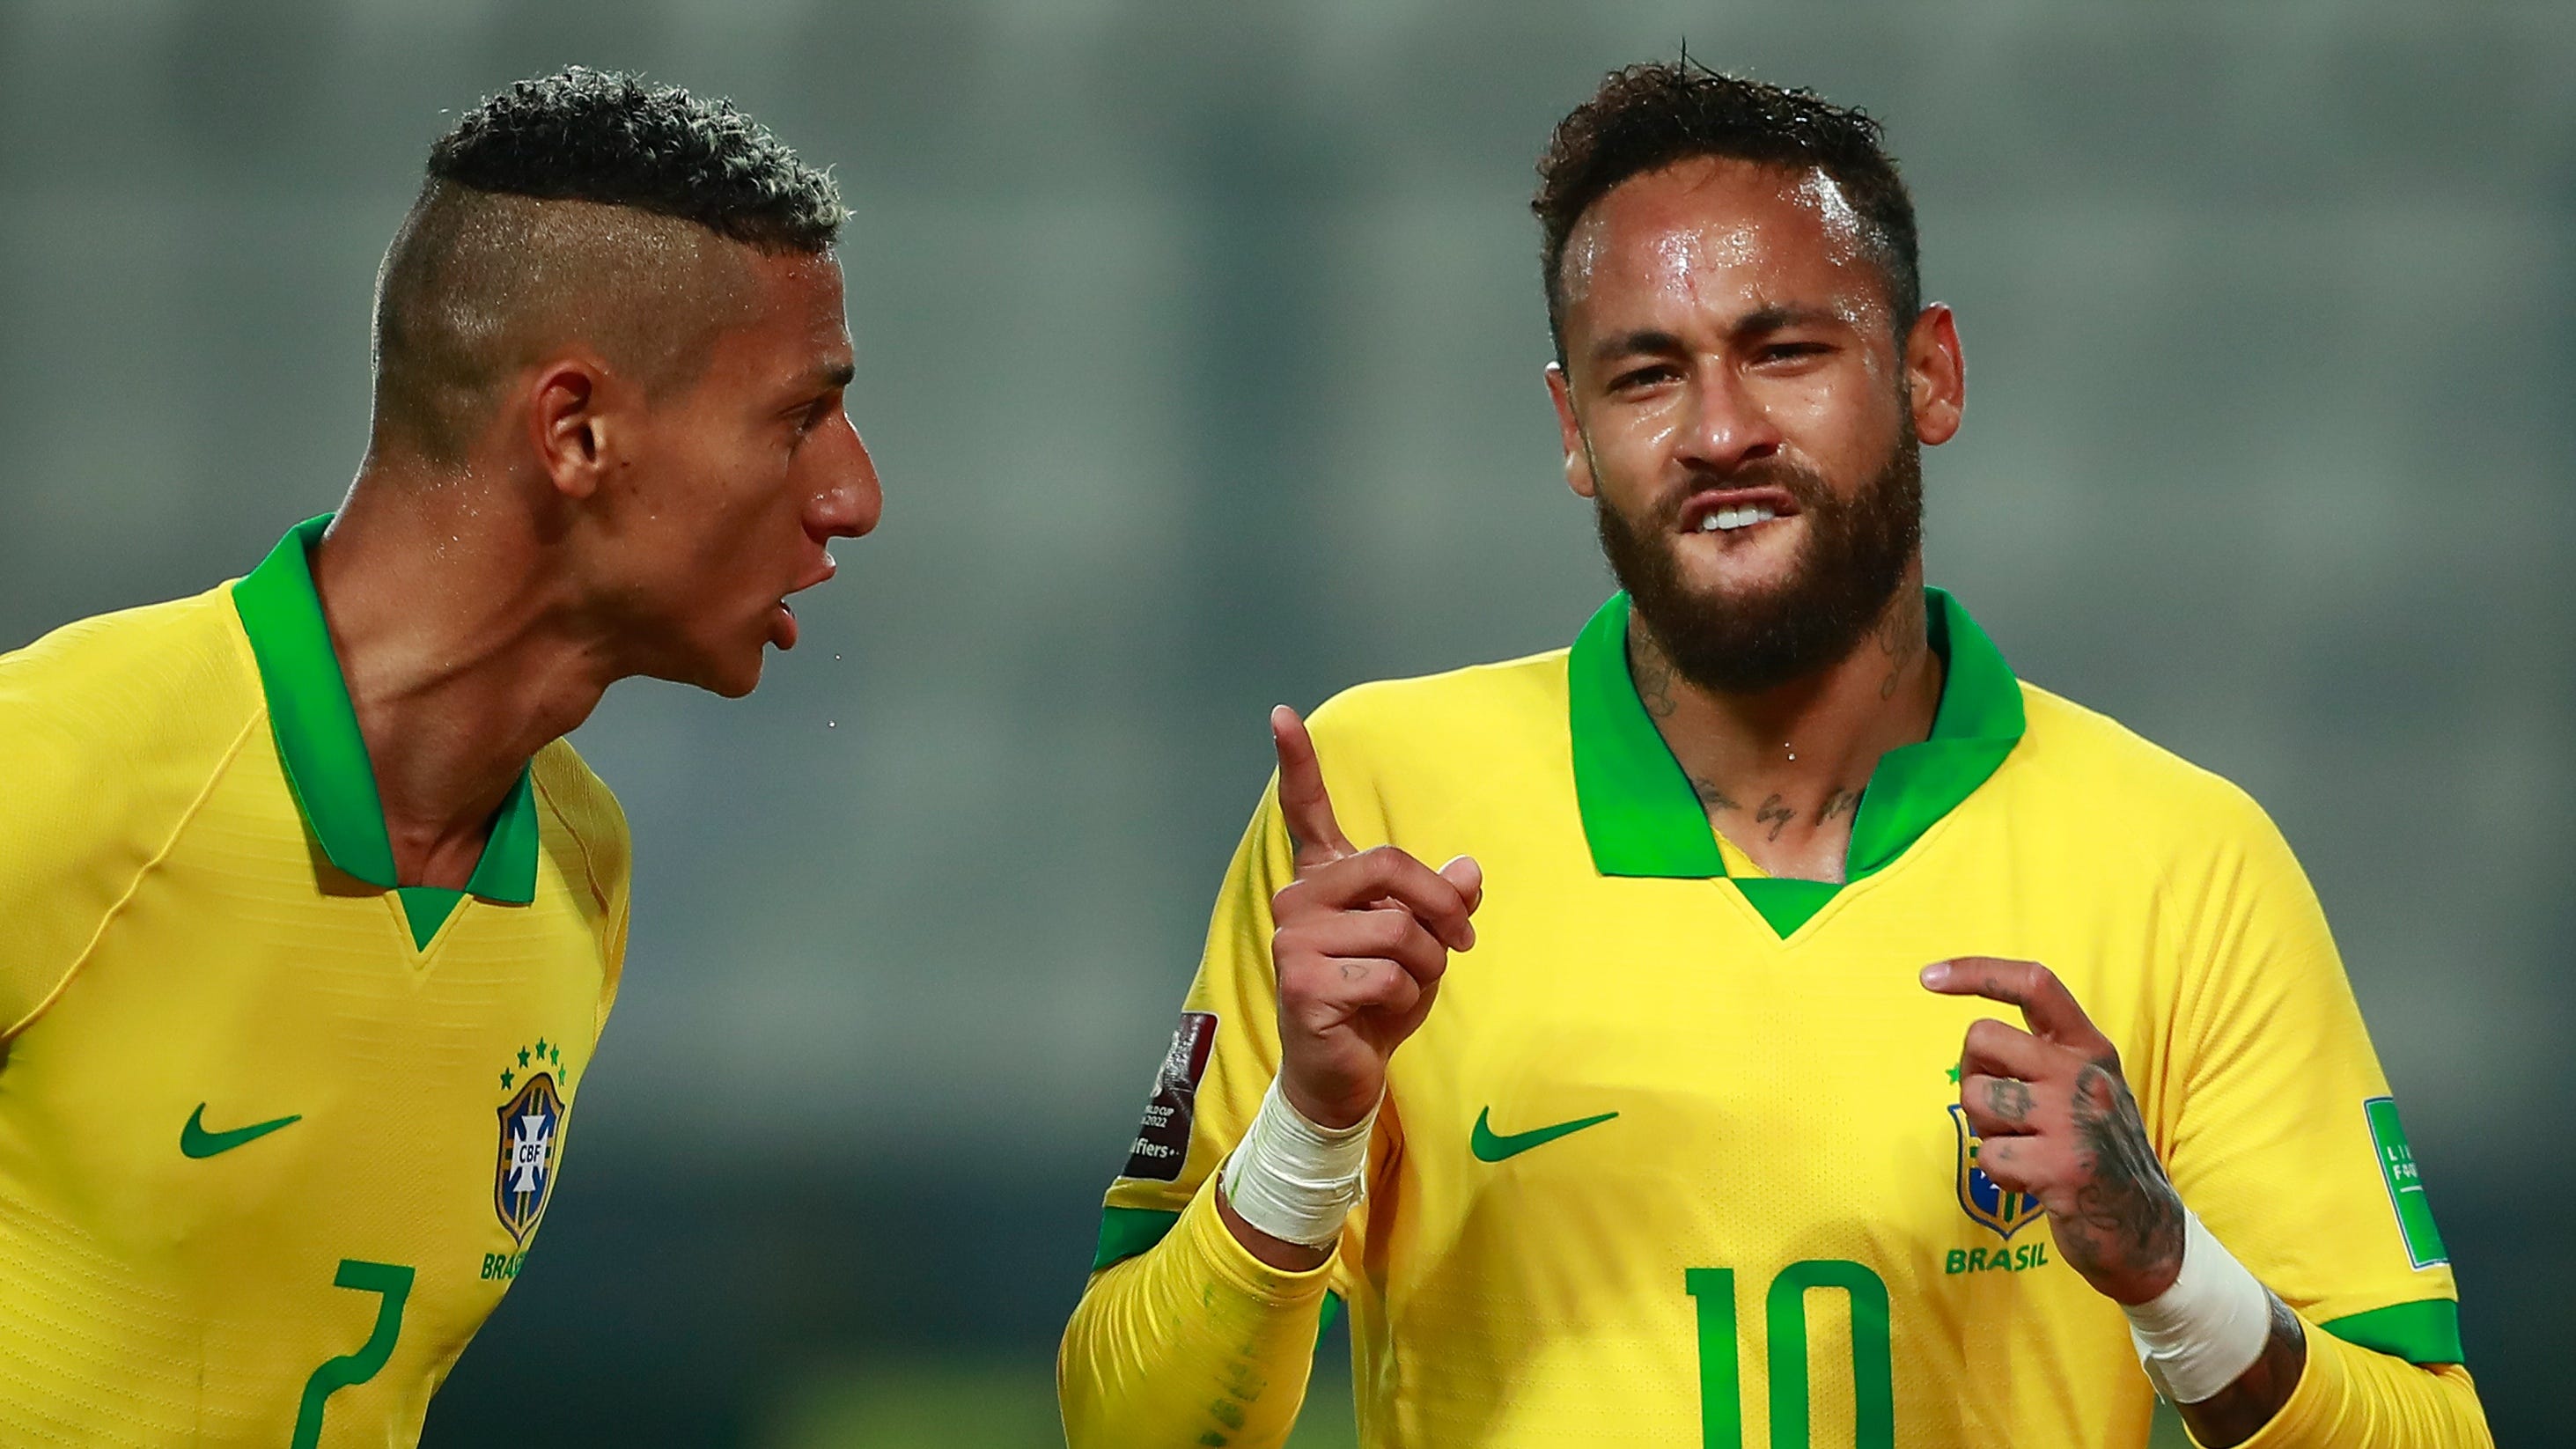 Neymar surpasses Ronaldo as Brazil's second-highest goalscorer | Goal.com